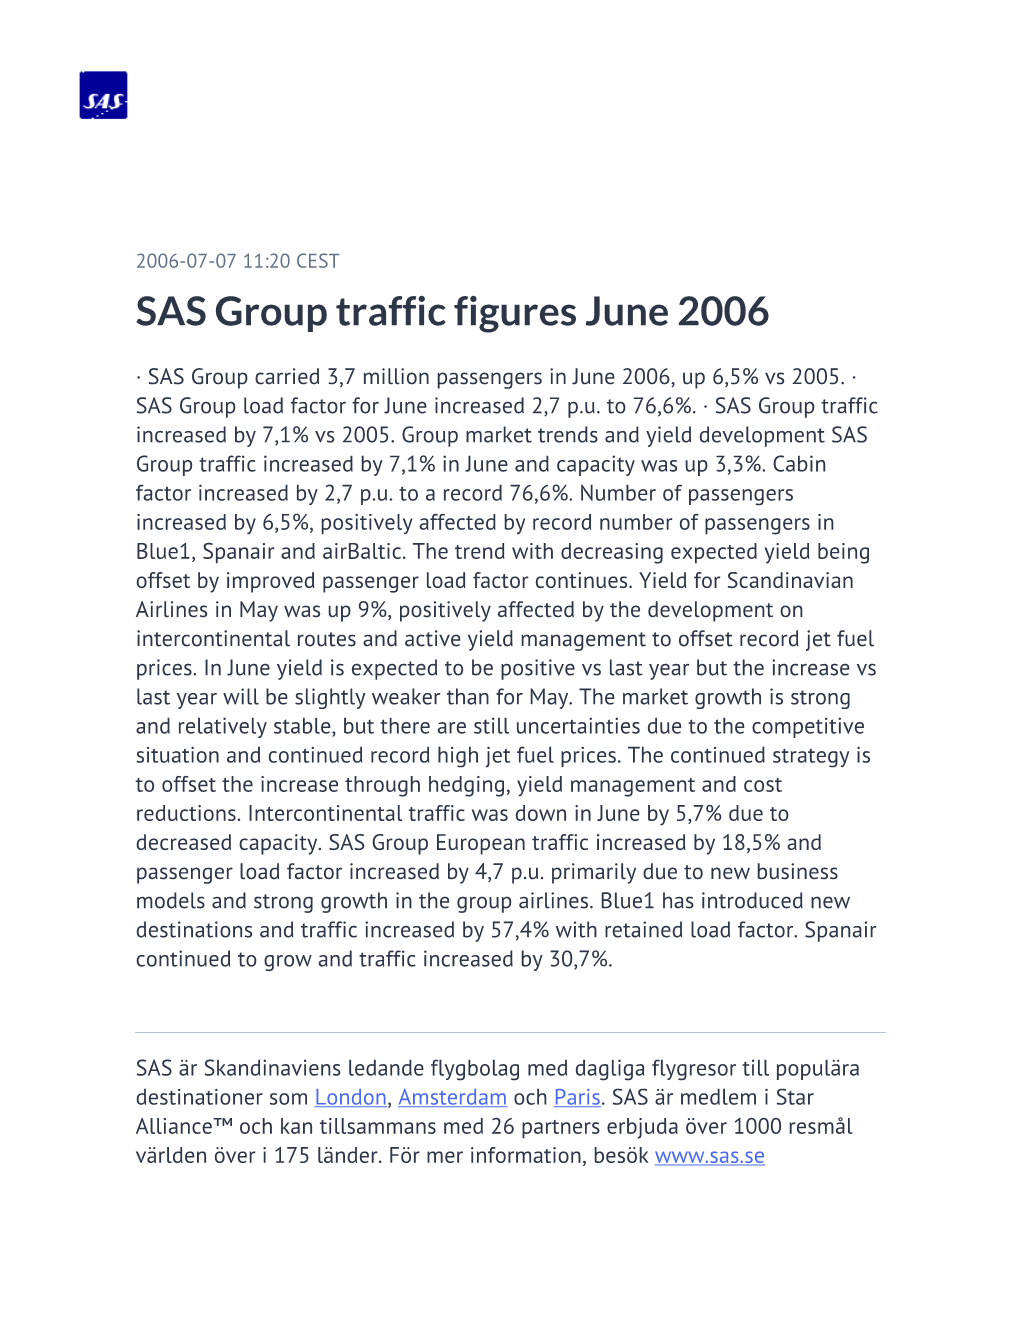 SAS Group Traffic Figures June 2006